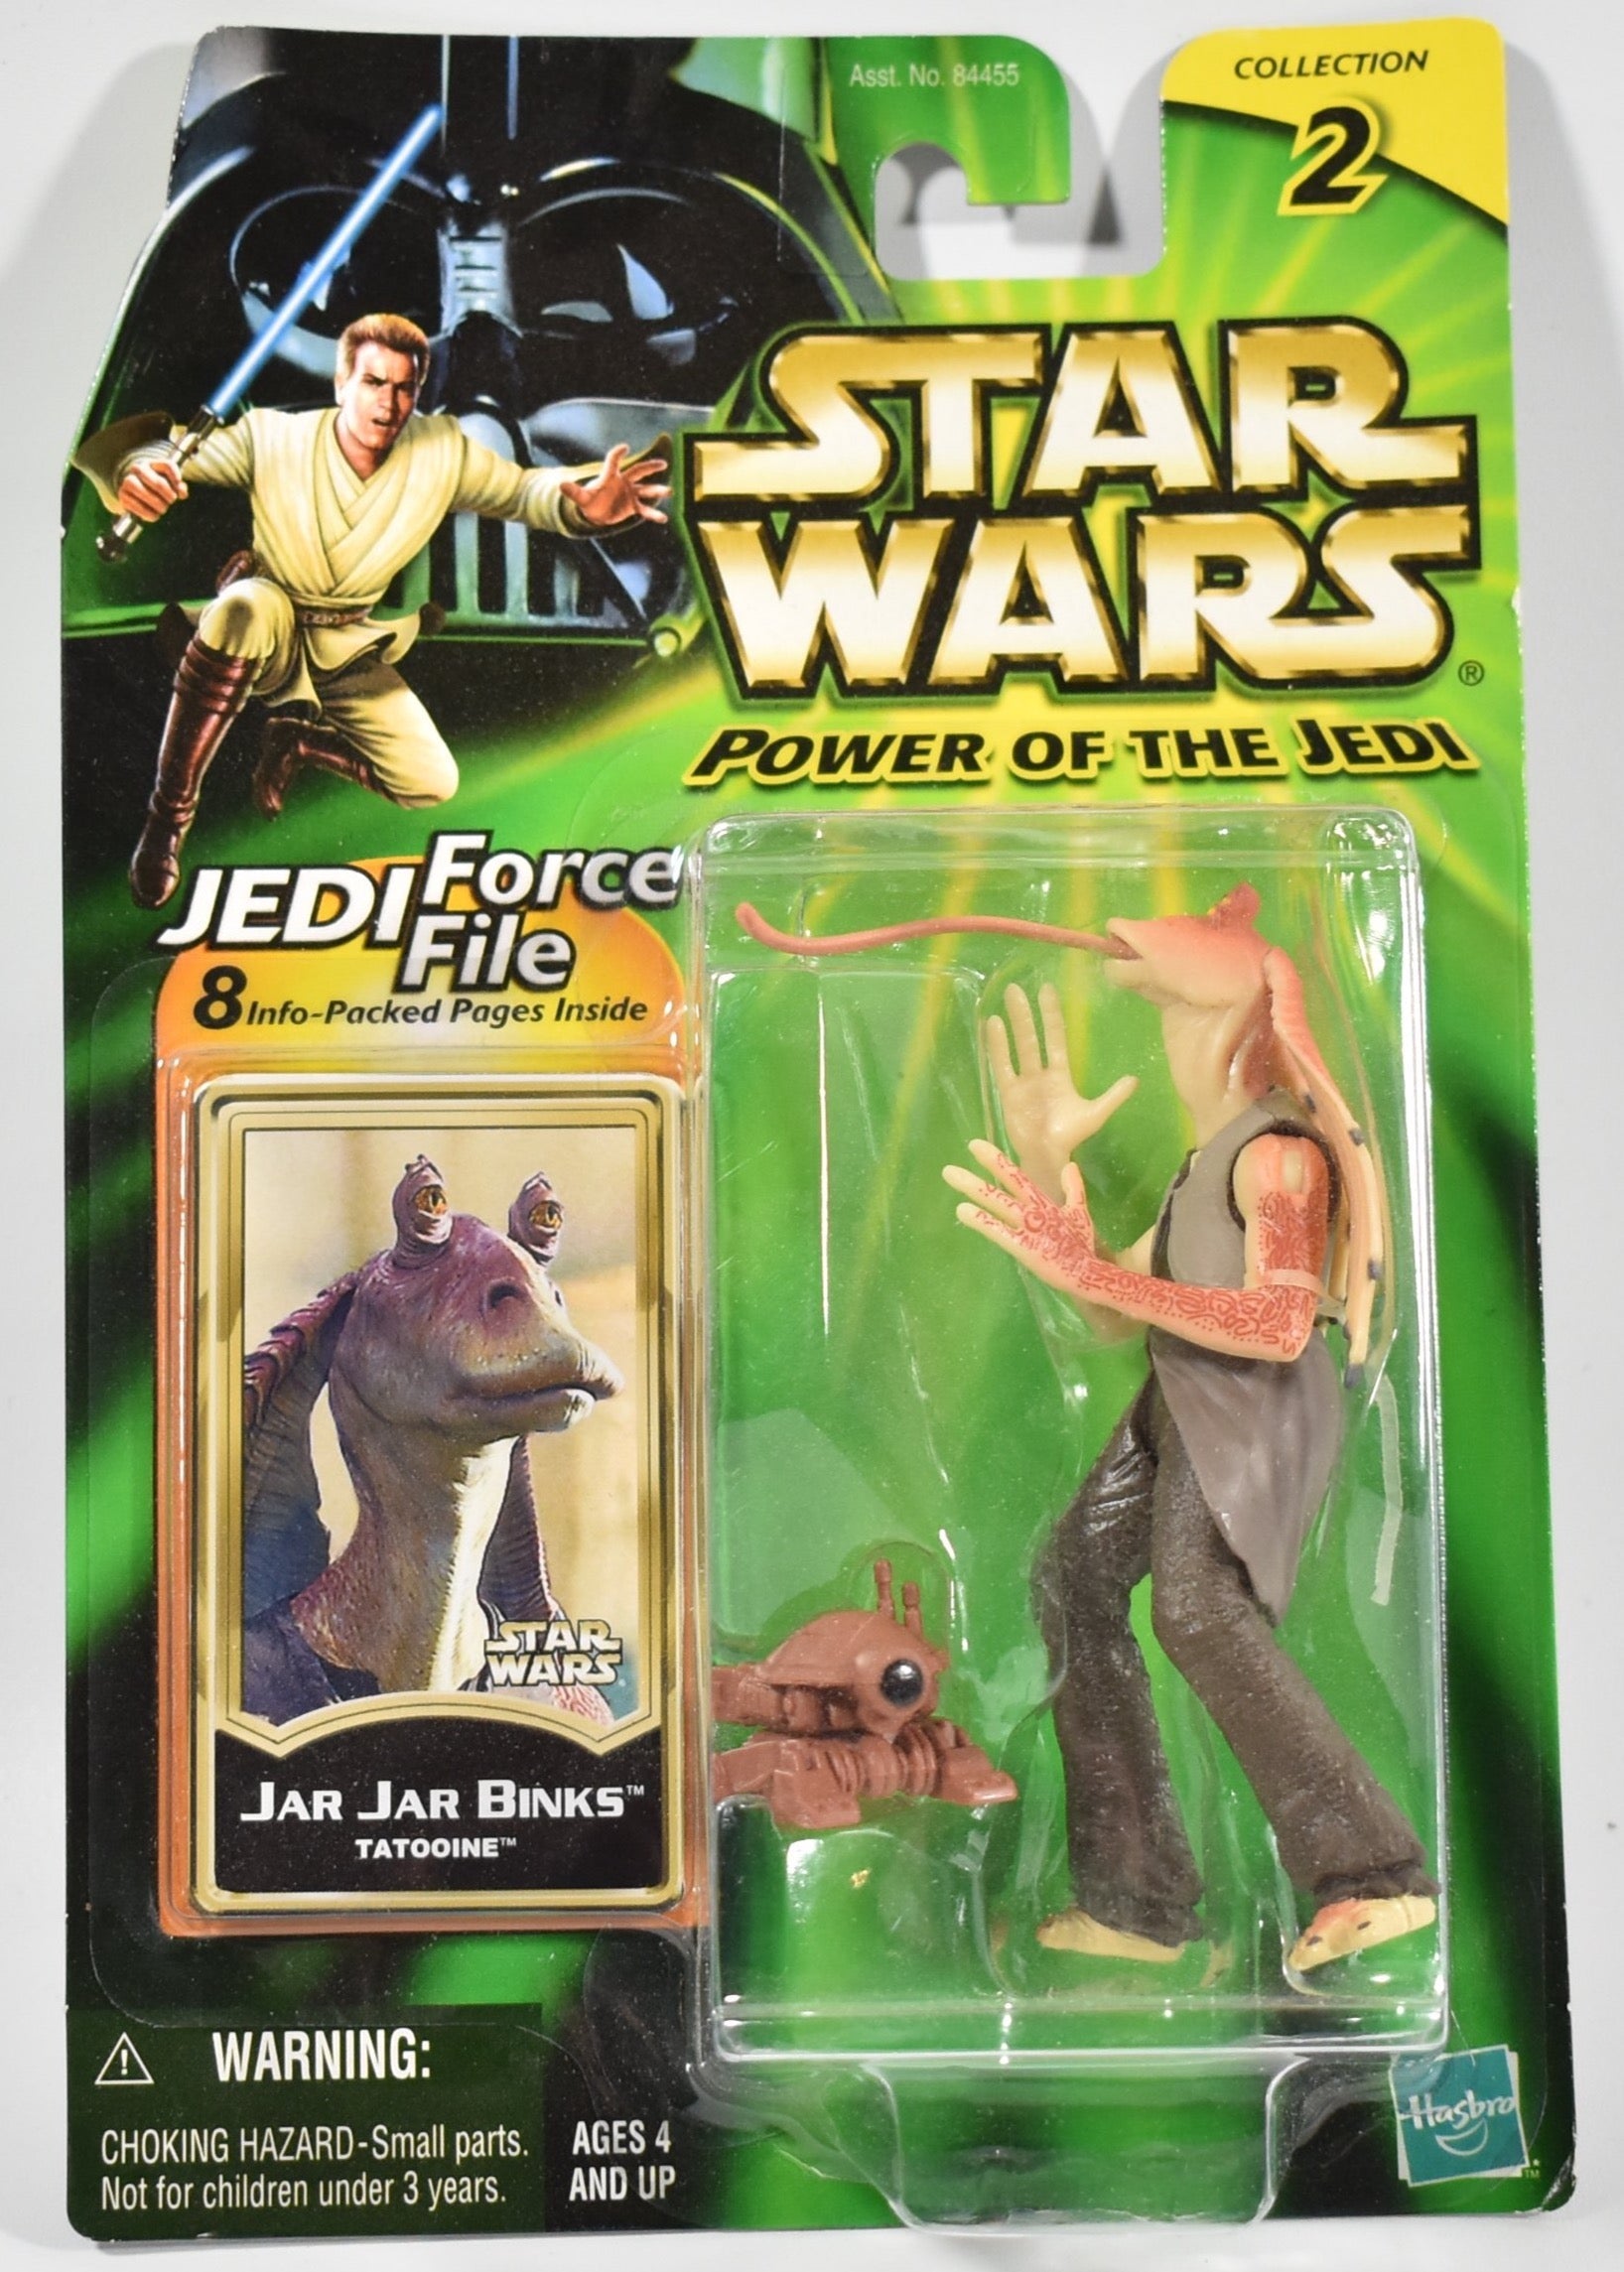 Star Wars Power of the Jedi Action Figure Jar Jar Binks Tatooine